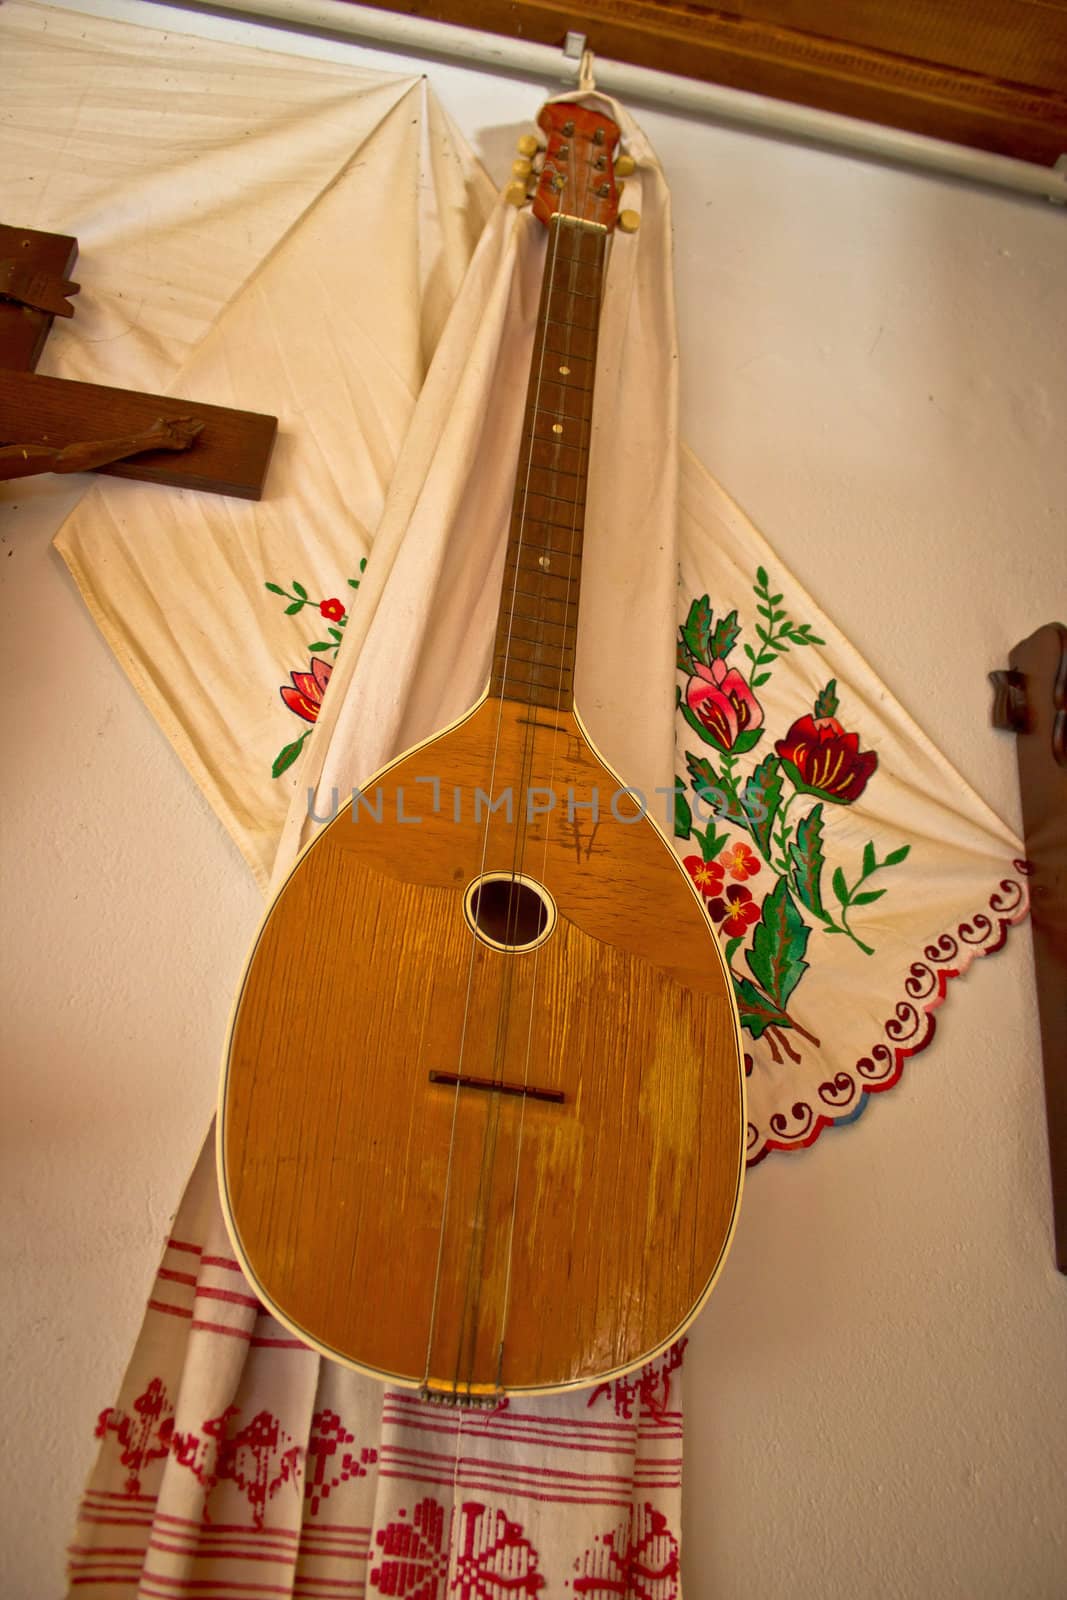 Tamburica (tambourica)- Croatian traditional music instrument on the wall